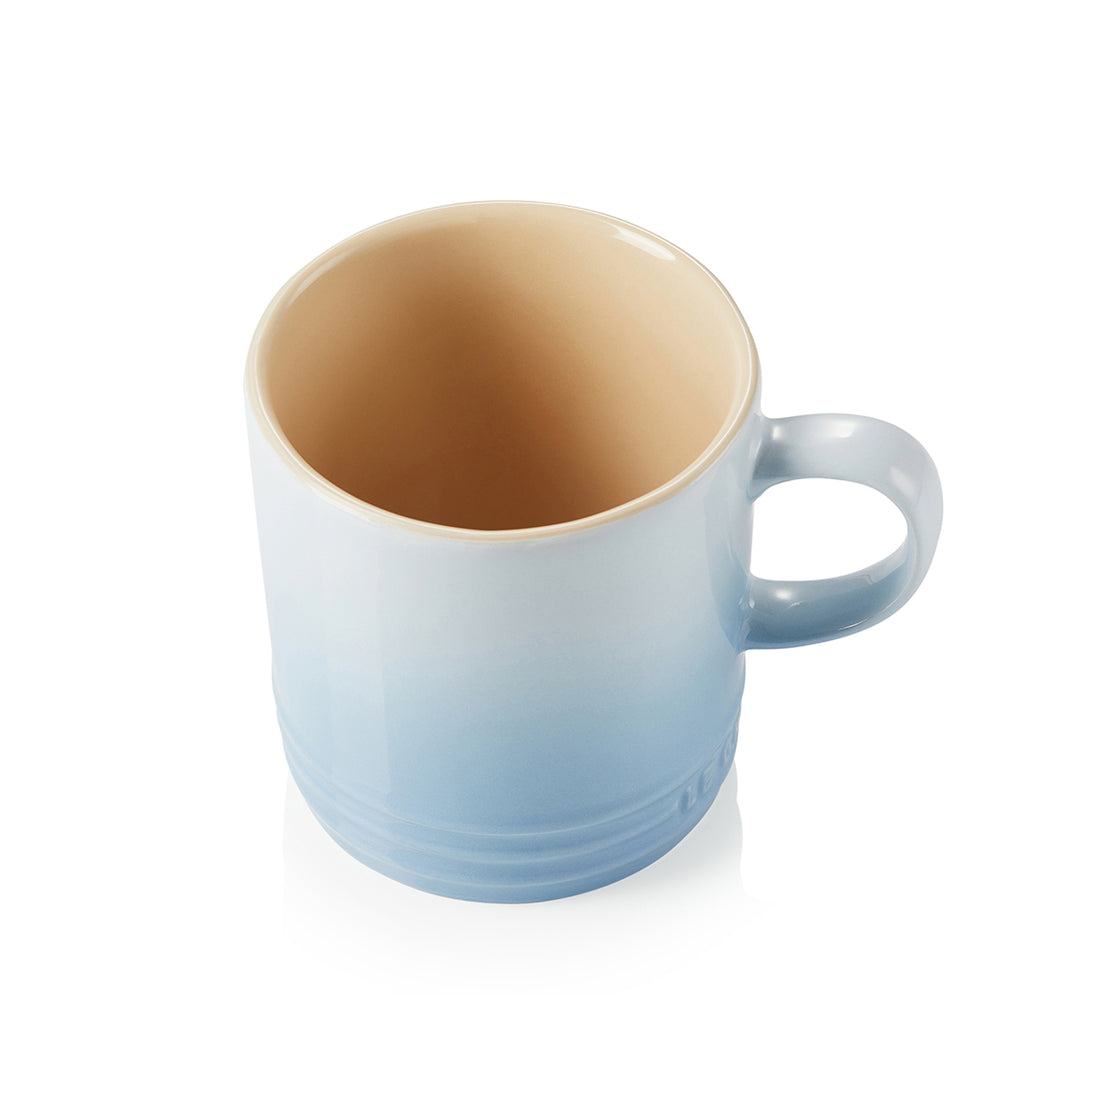 Le Creuset, Le Creuset Stoneware Mug - Coastal Blue, Redber Coffee